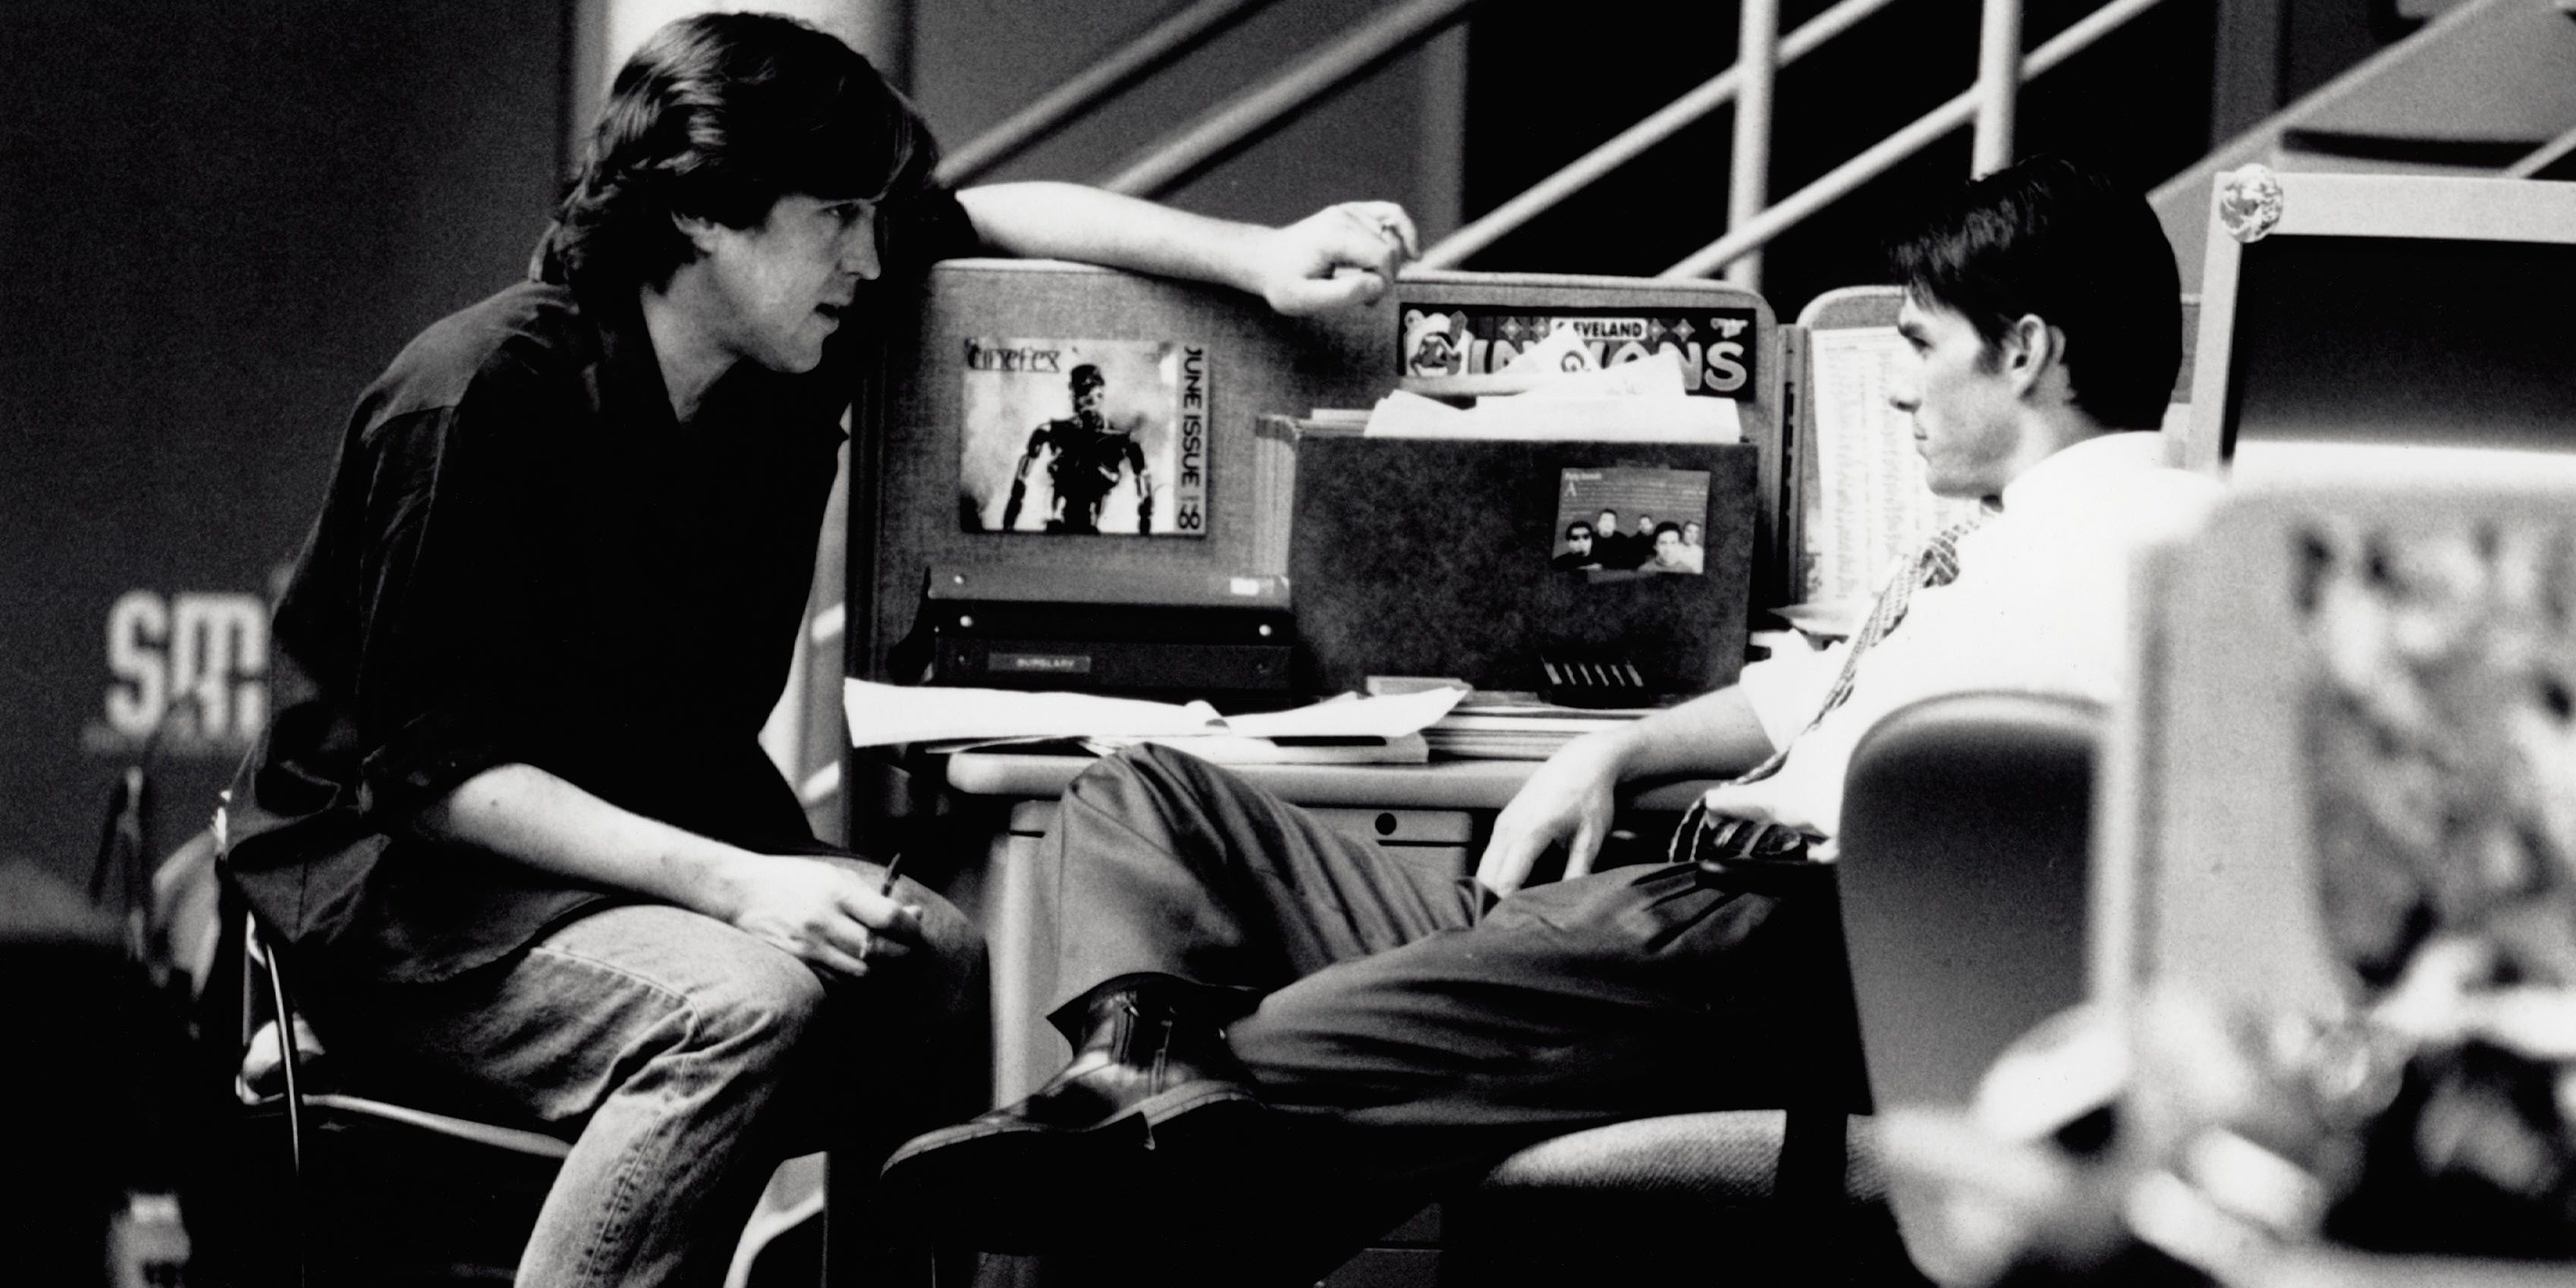 Tom Cruise and Cameron Crowe on set